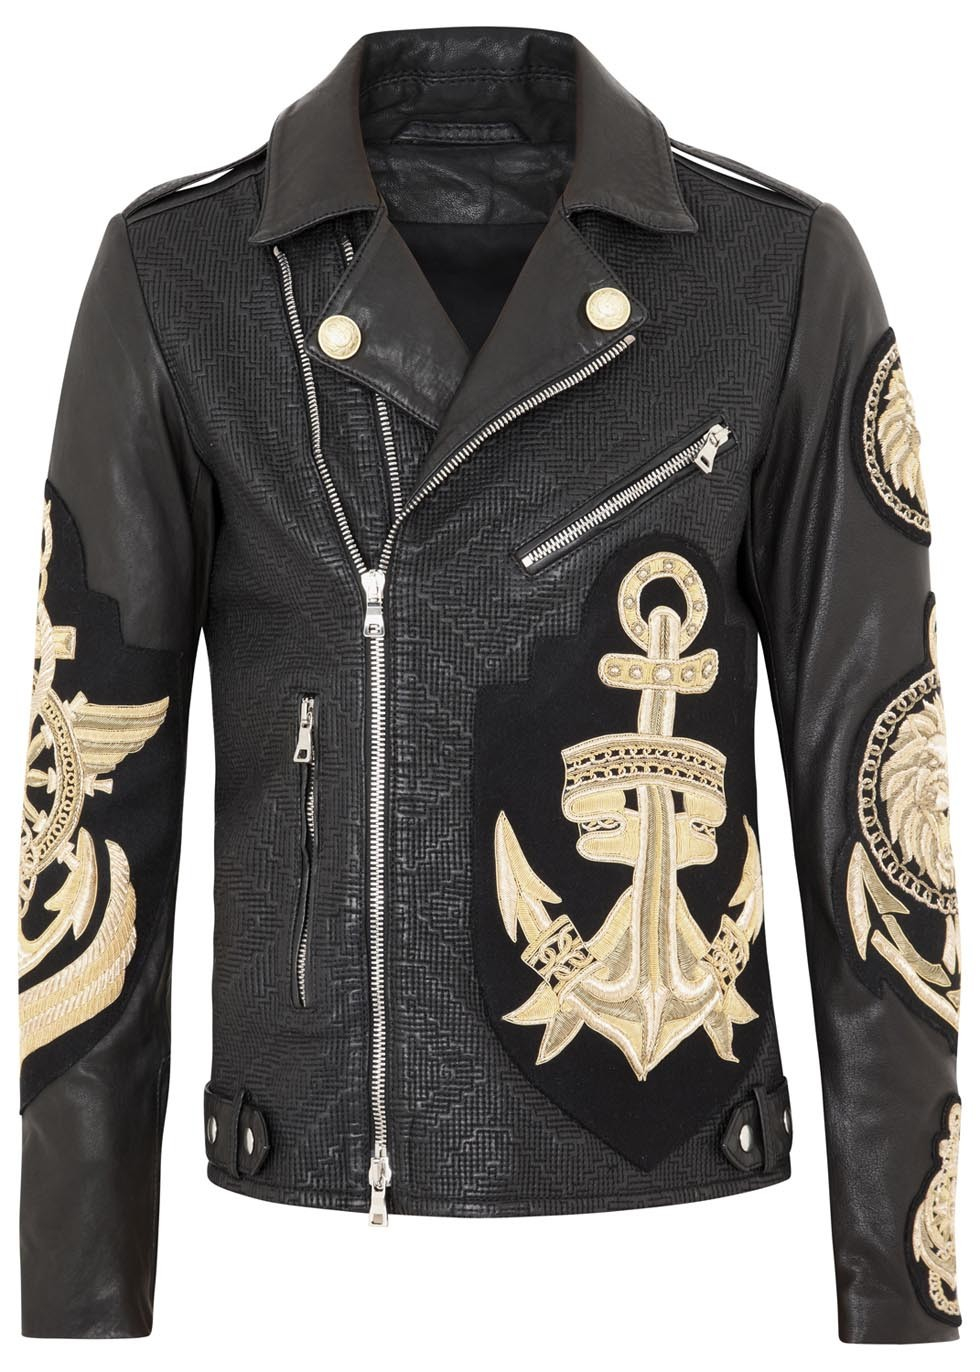 Balmain Black Embroidered Leather Biker Jacket in Metallic for Men - Lyst